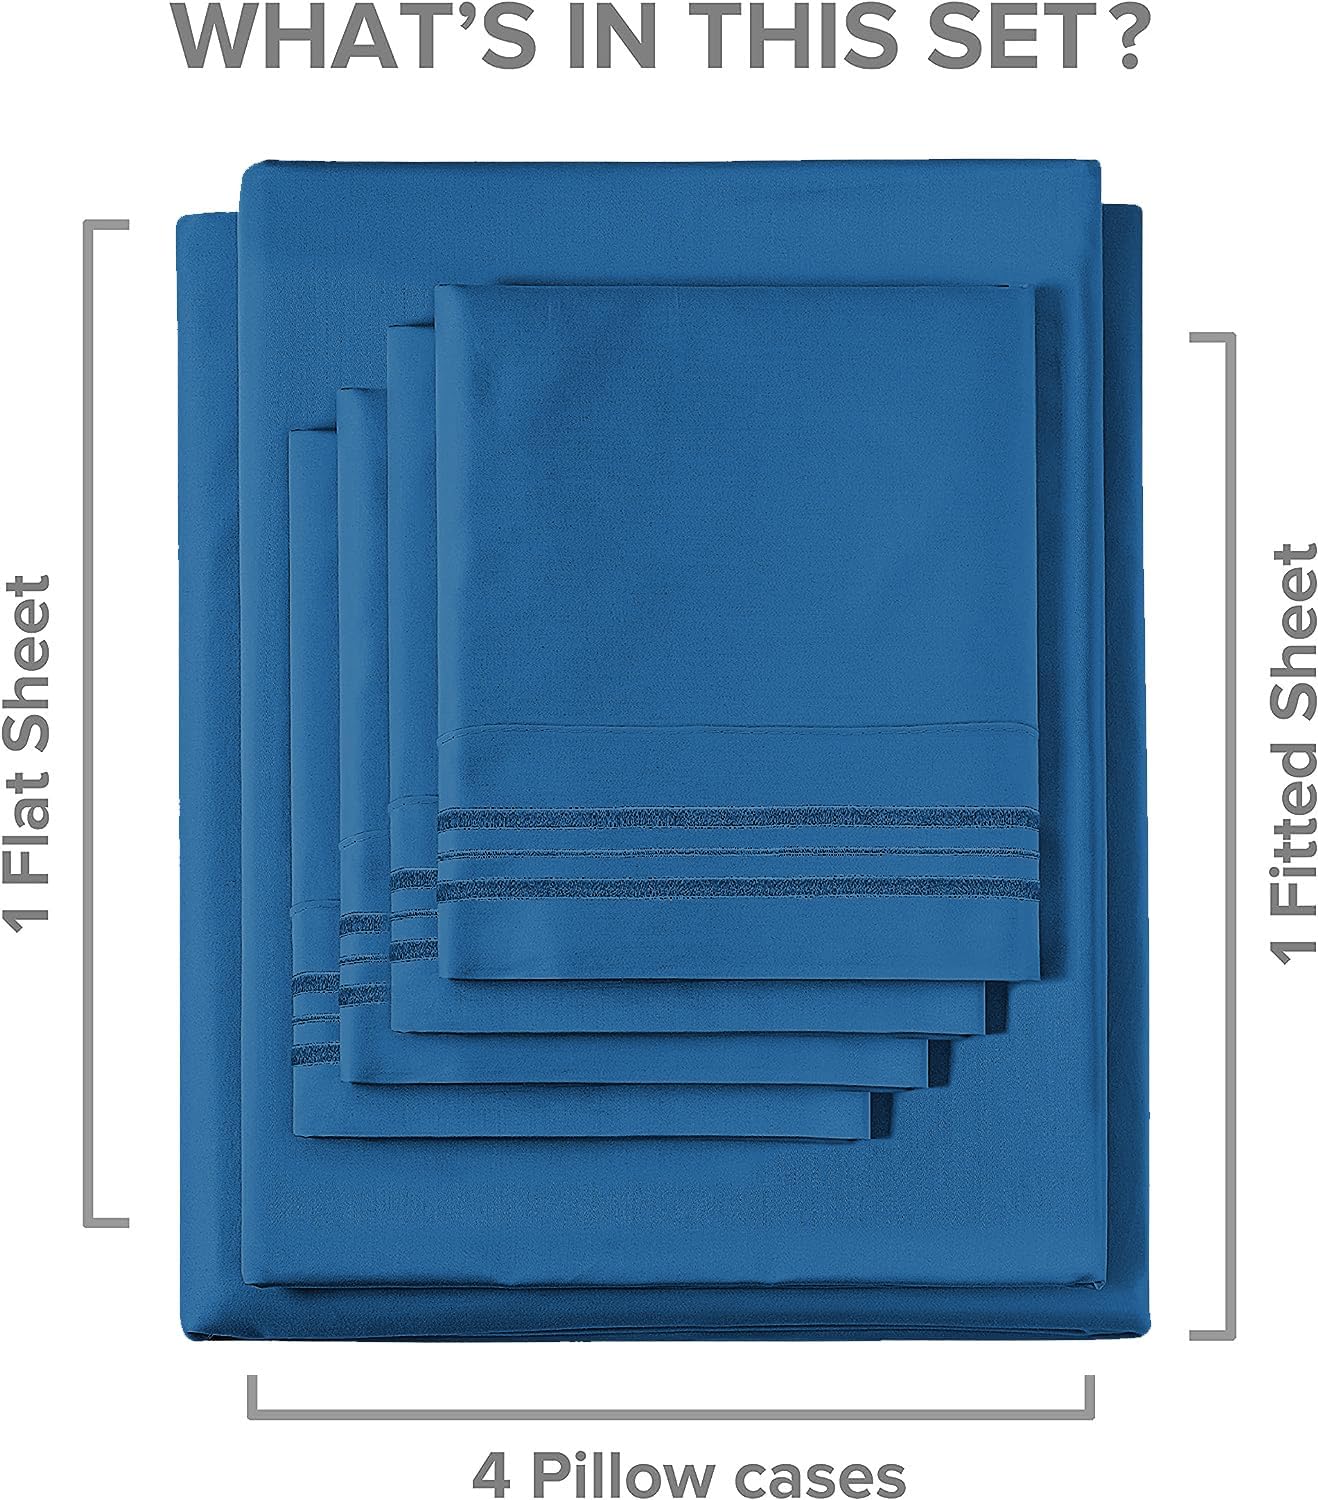 6 Piece Deep Pocket Sheet Set New Colors - Royal Blue